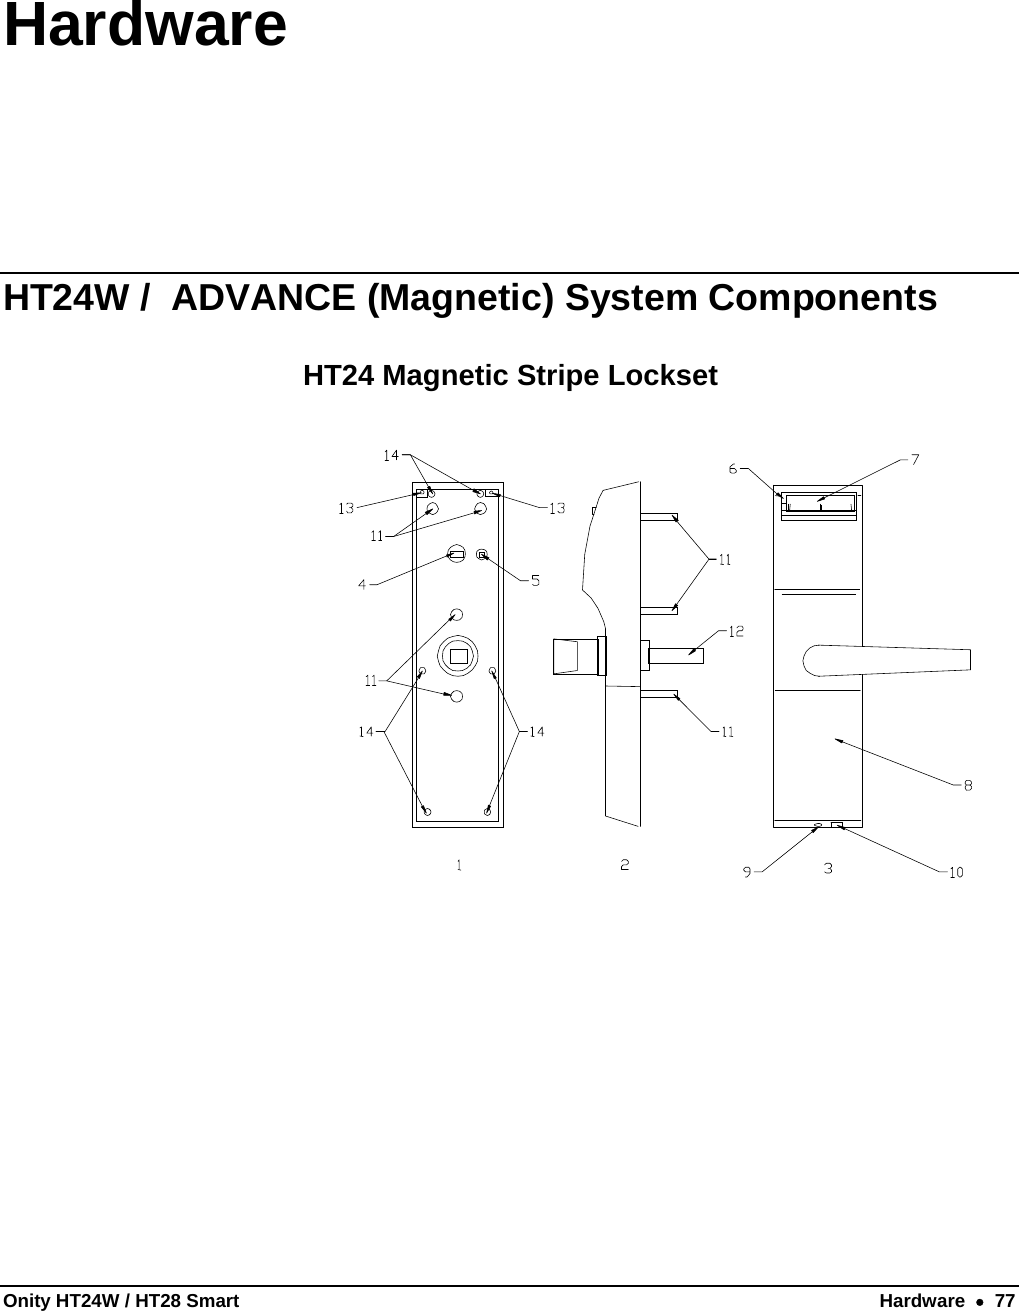  Onity HT24W / HT28 Smart  Hardware  •  77 Hardware HT24W /  ADVANCE (Magnetic) System Components HT24 Magnetic Stripe Lockset  